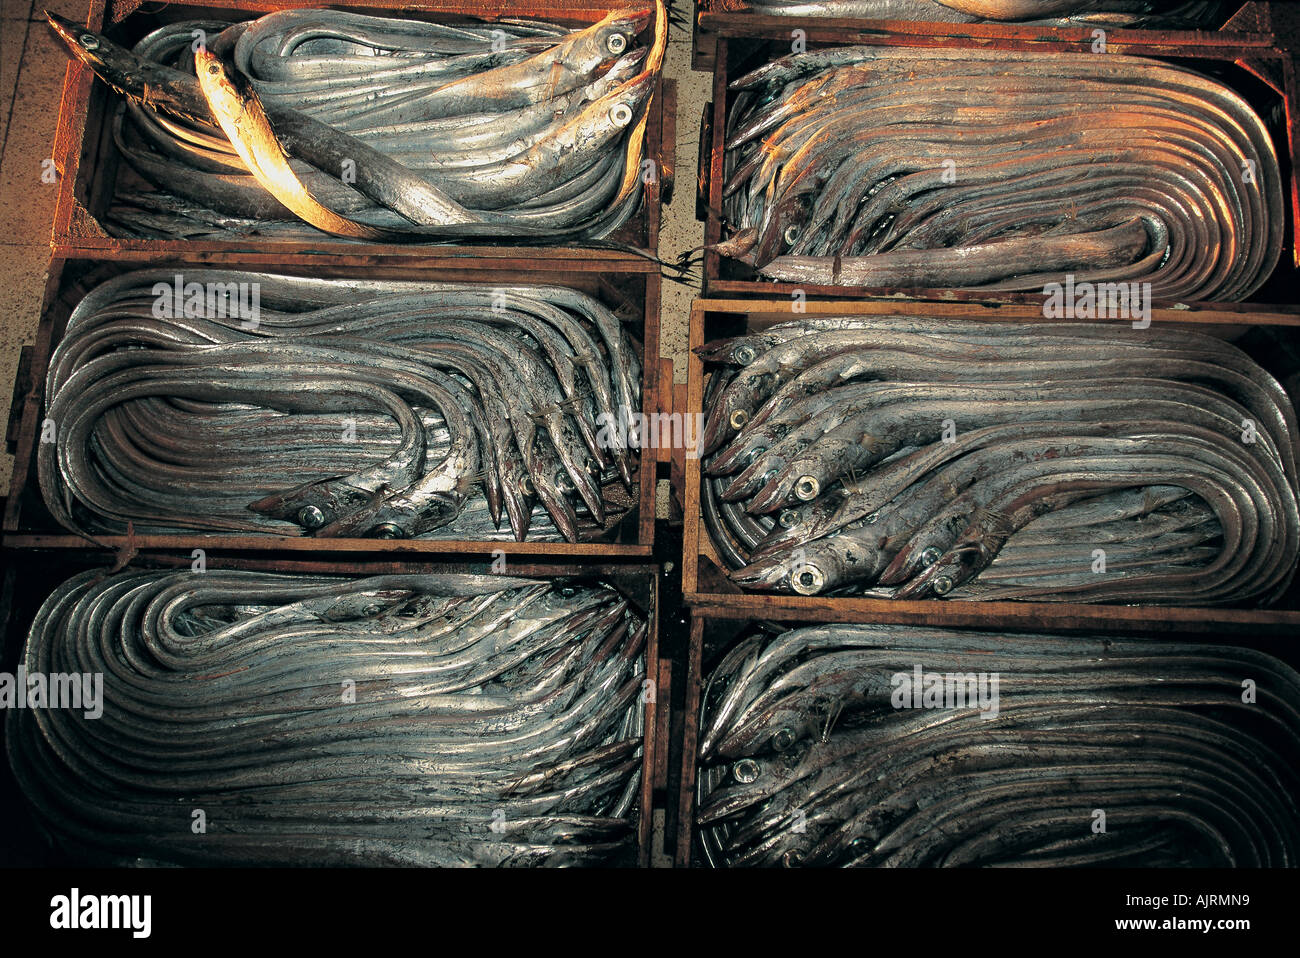 Snake blennies, Ophidion barbatum, in Izmir fish market, Turkey. Stock Photo